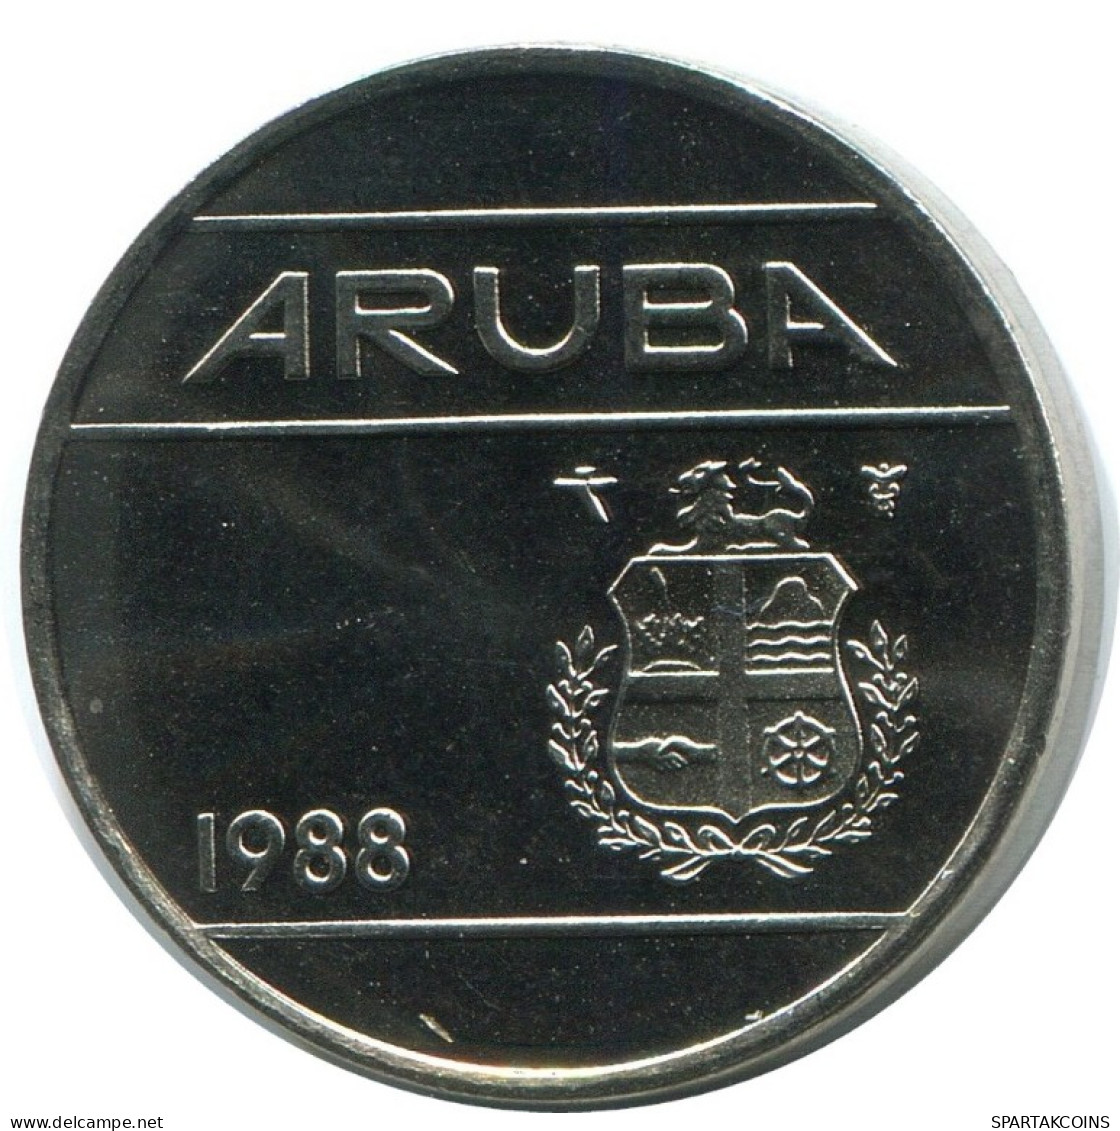 25 CENTS 1988 ARUBA Moneda (From BU Mint Set) #AH069.E.A - Aruba